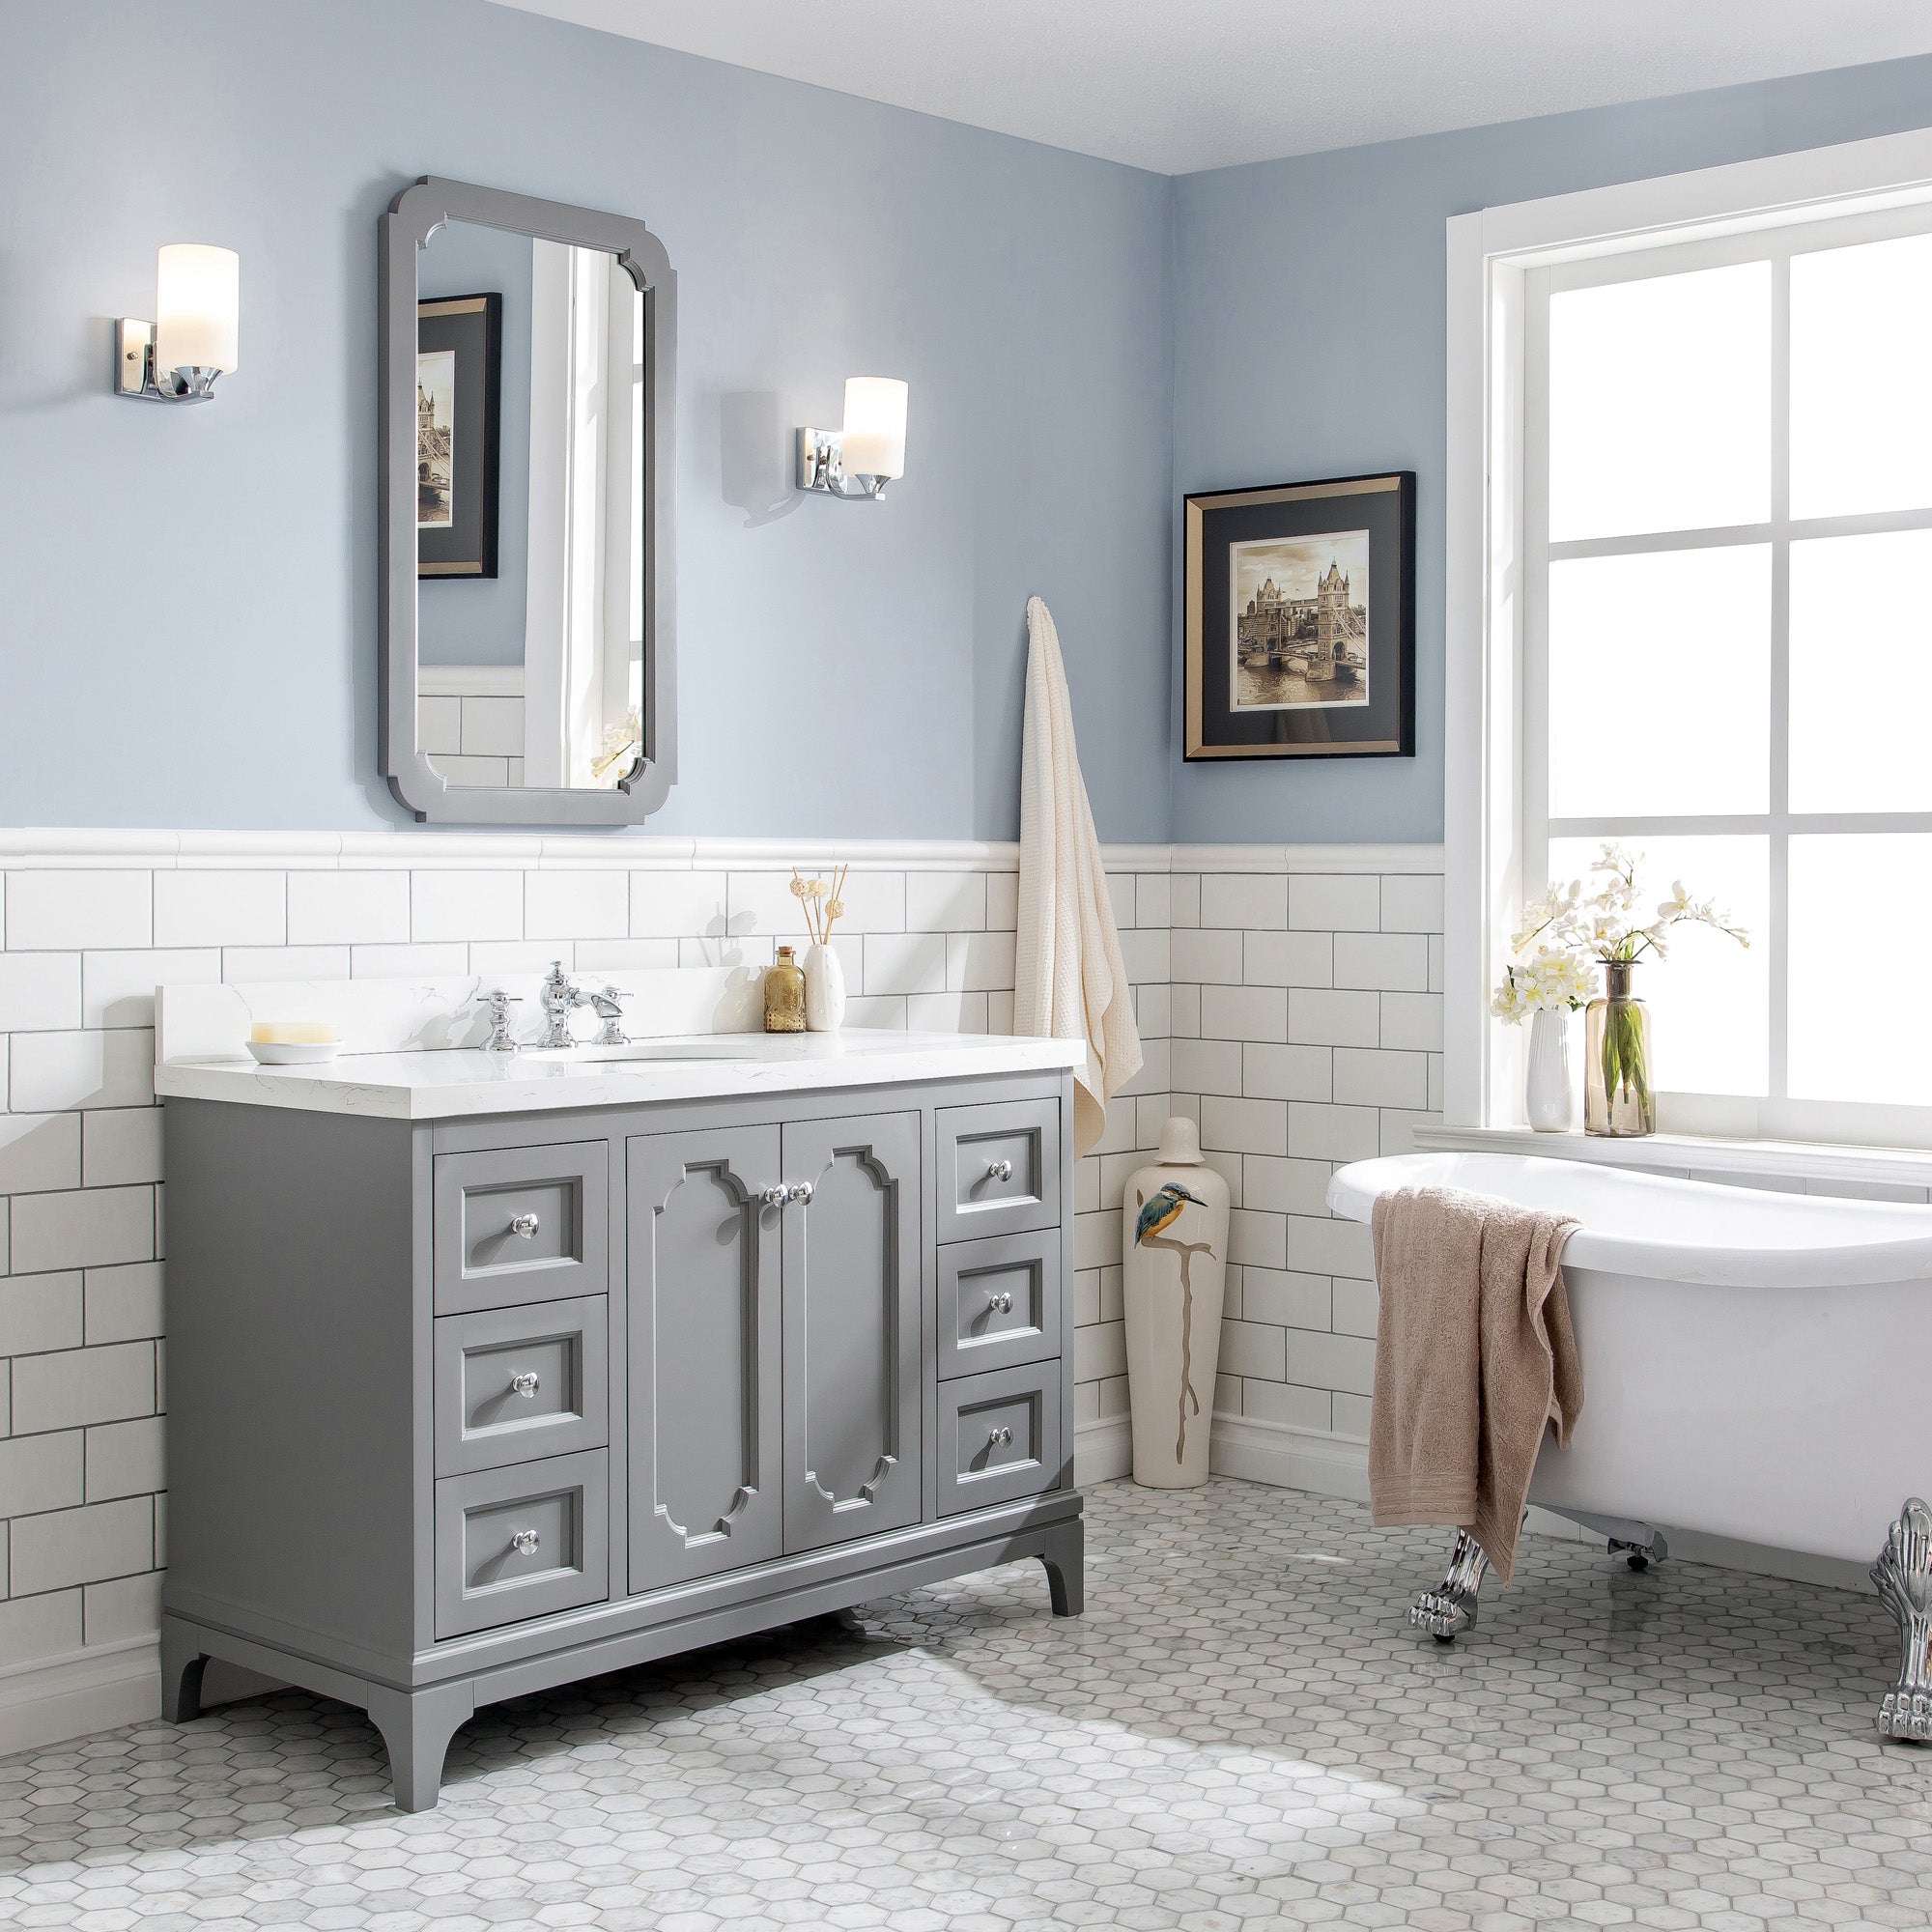 Water Creation | Queen 48-Inch Single Sink Quartz Carrara Vanity In Cashmere Grey  With F2-0013-01-FX Lavatory Faucet(s) | QU48QZ01CG-000FX1301